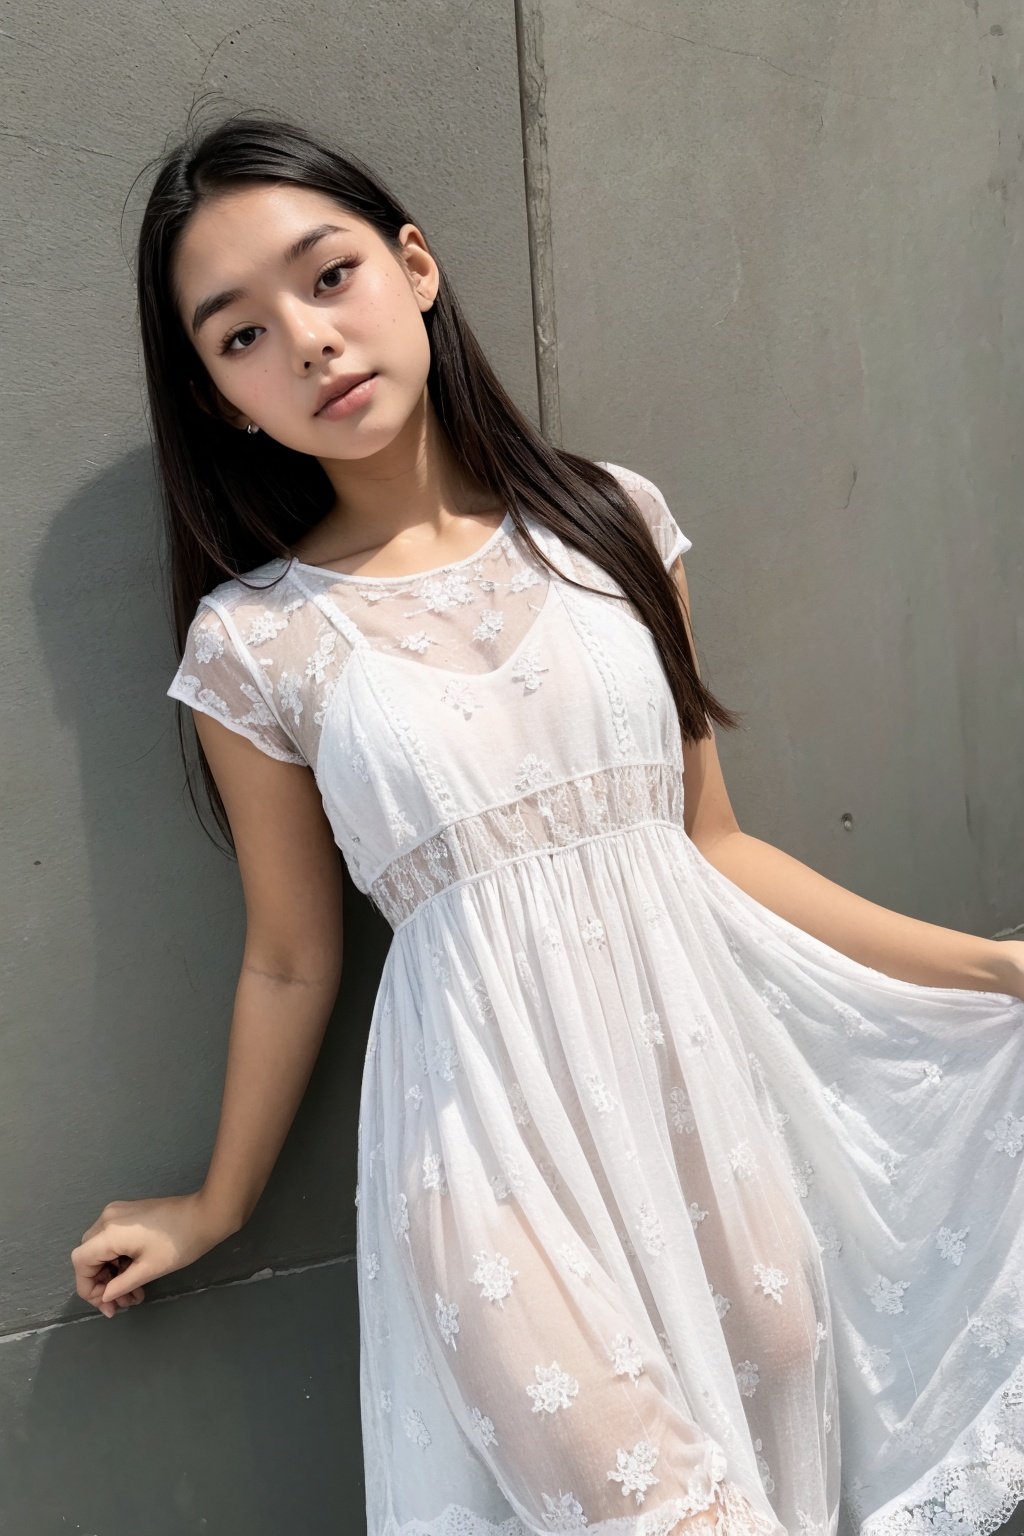 (16 years old girl), medium shot, baby dress